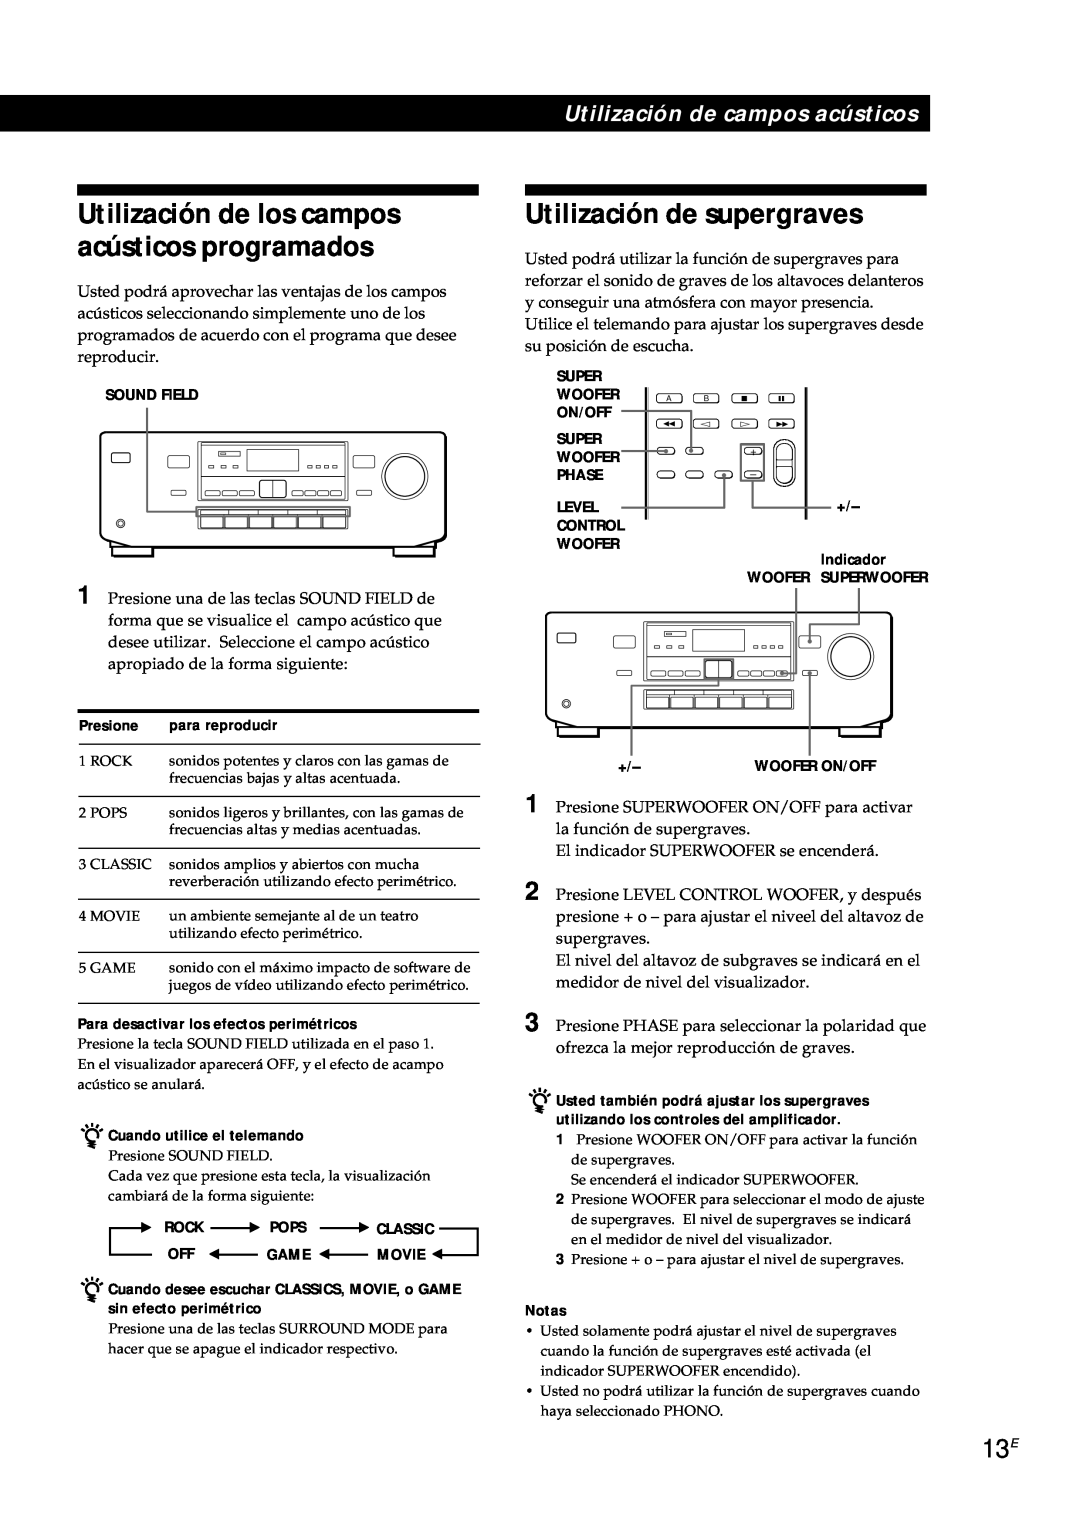 Sony TA-AV561A Utilización de supergraves, Utilización de los campos acústicos programados, Presione, para reproducir 